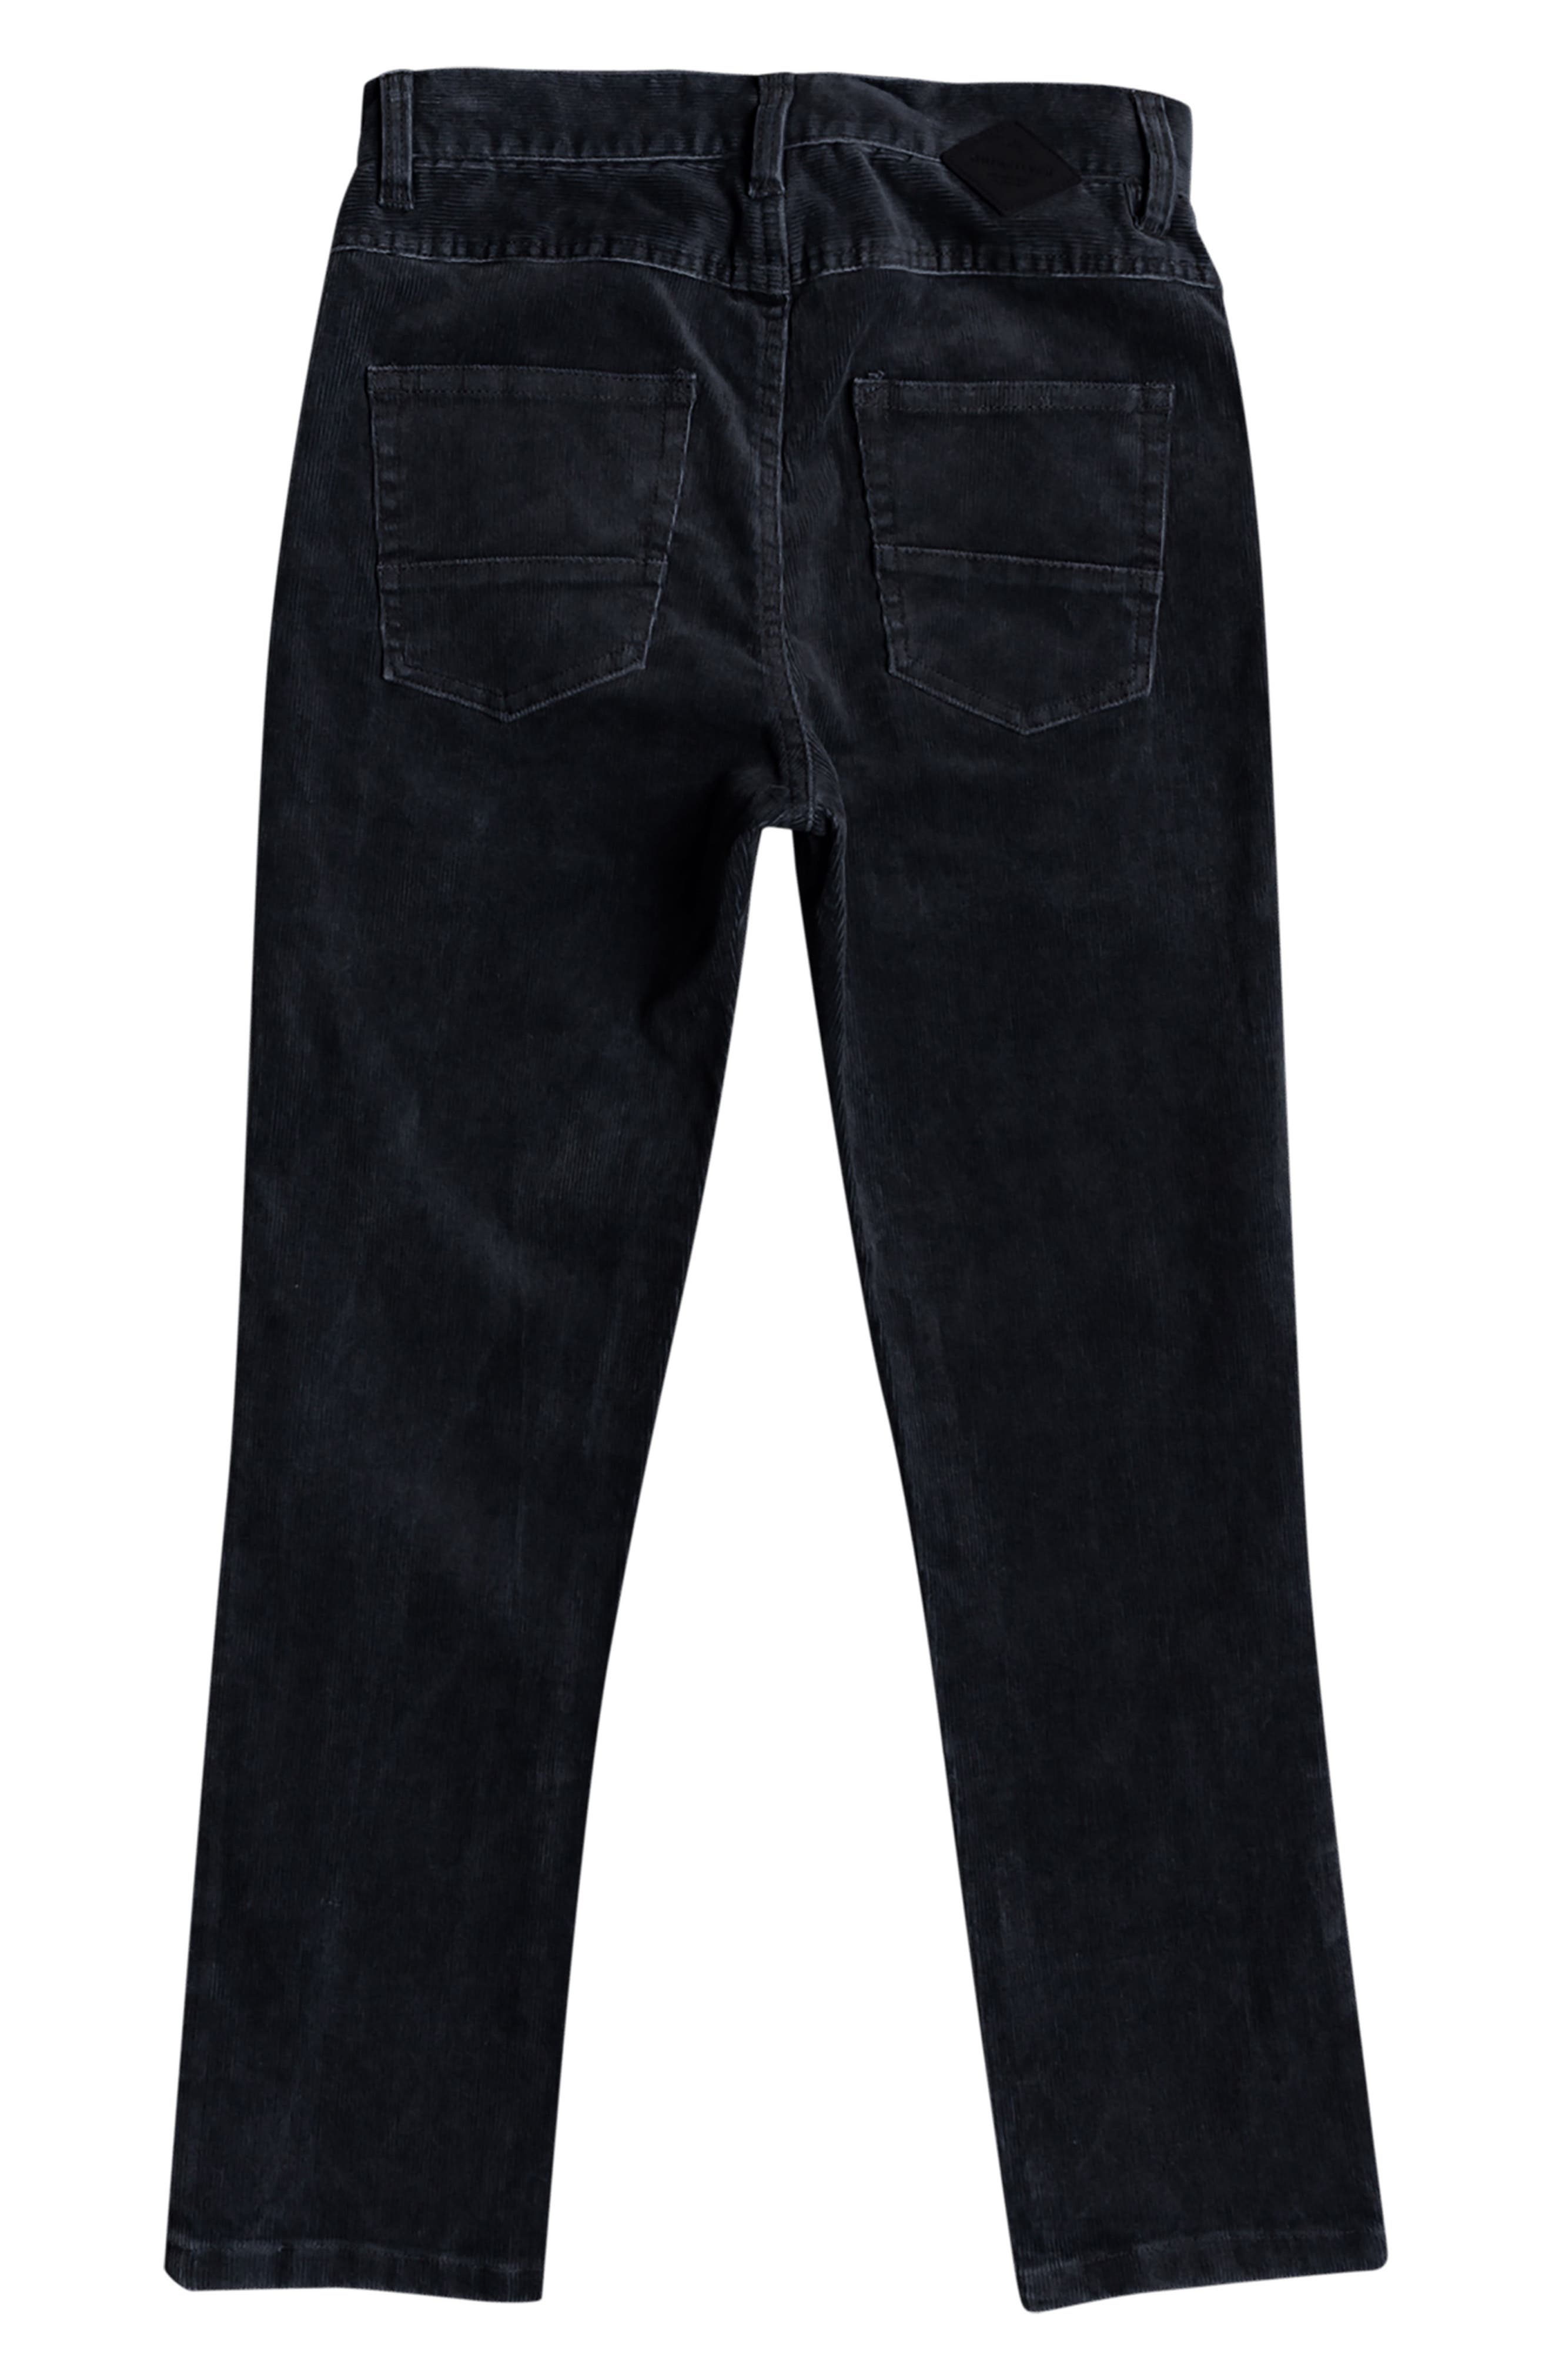 Quiksilver Quicksilver Mens Jeans Slim Straight Cotton Blend Blue Button Fly Size 28 